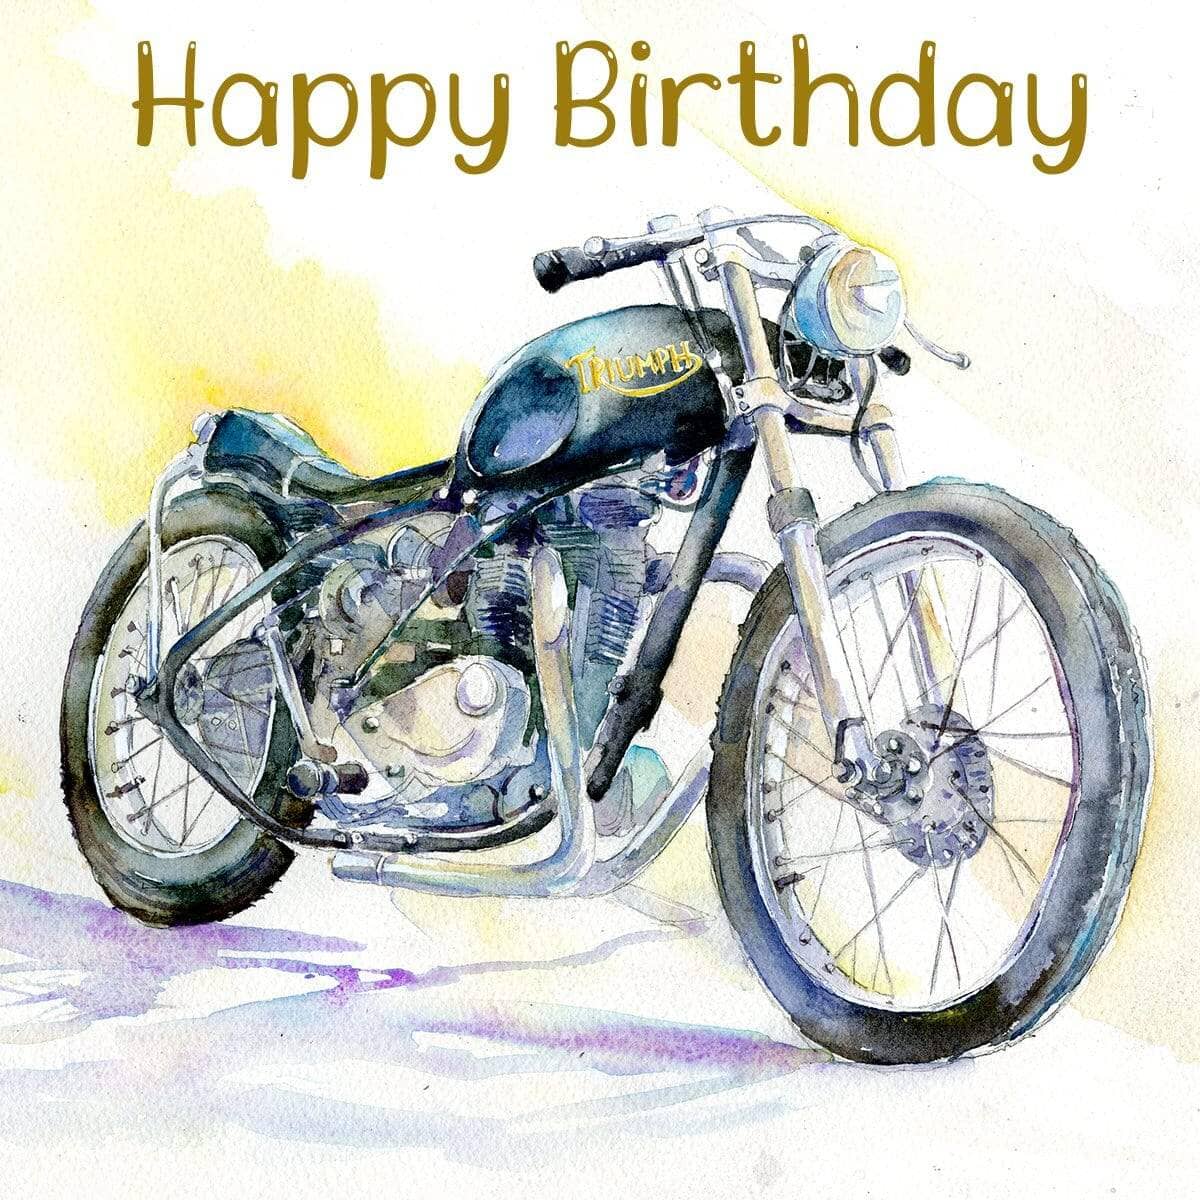 Happy birthday motorcycle